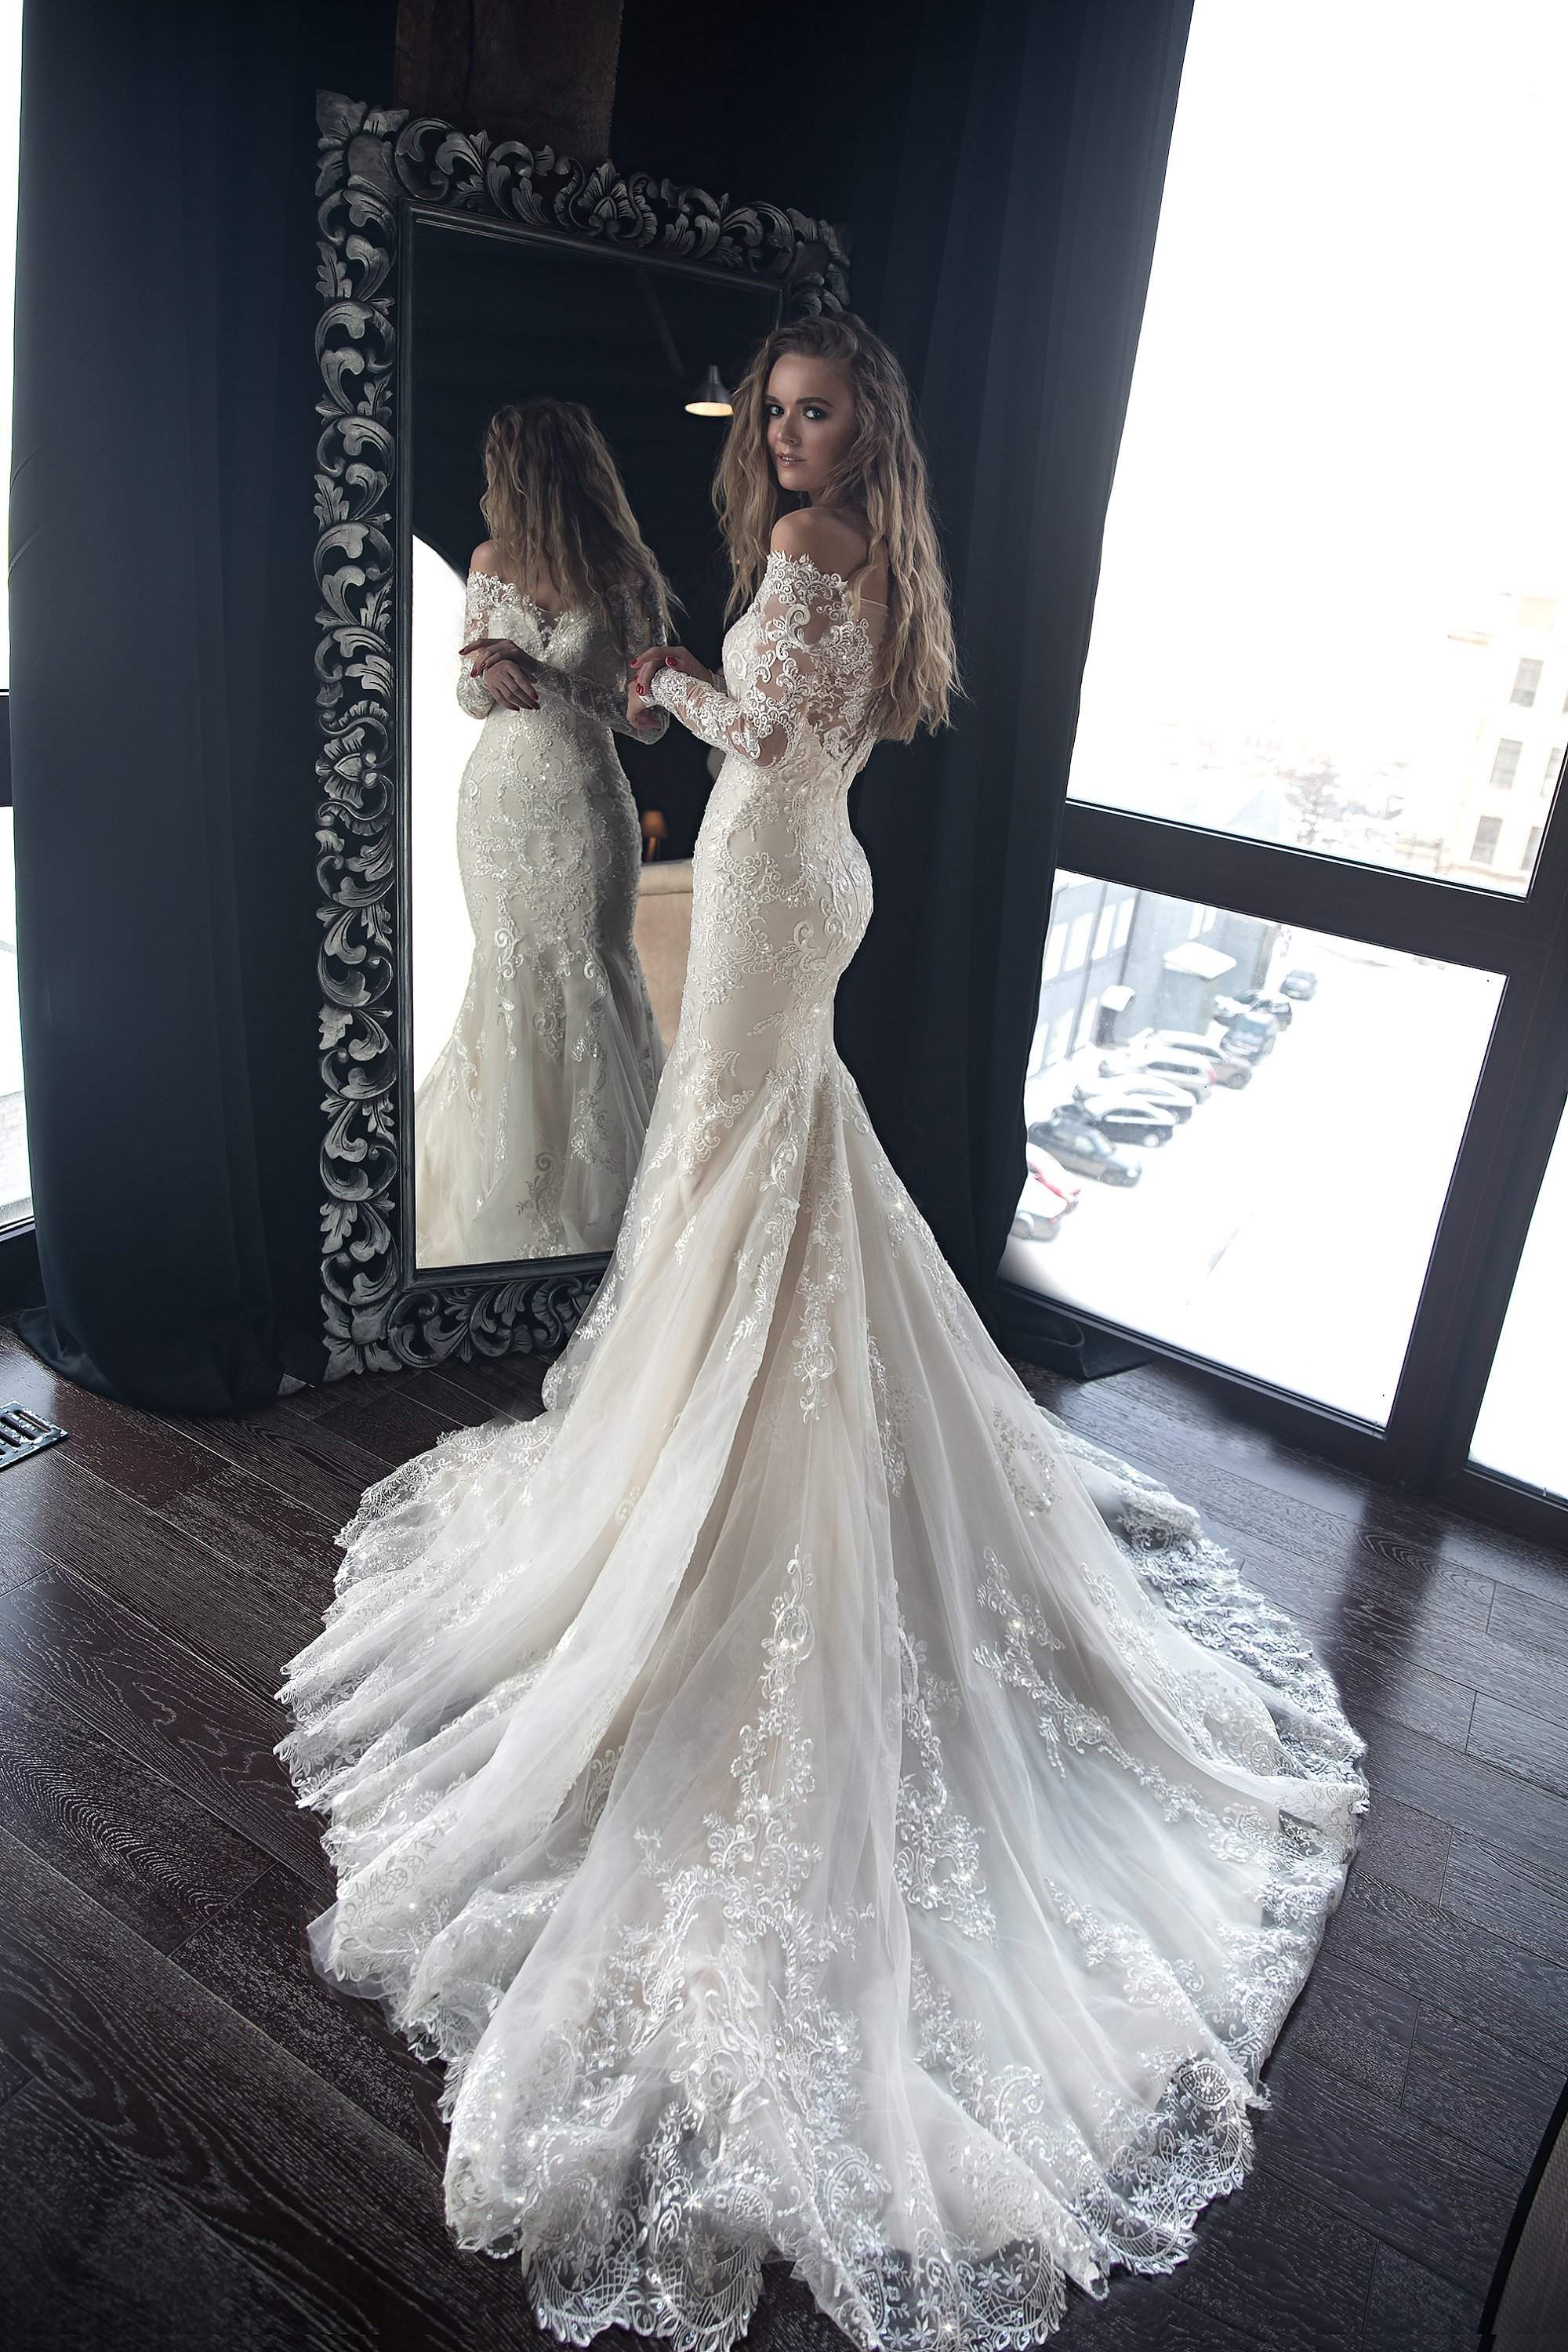 Yc449 Bridal Wedding Dress New Simple Bra Deep V Mermaid Dress